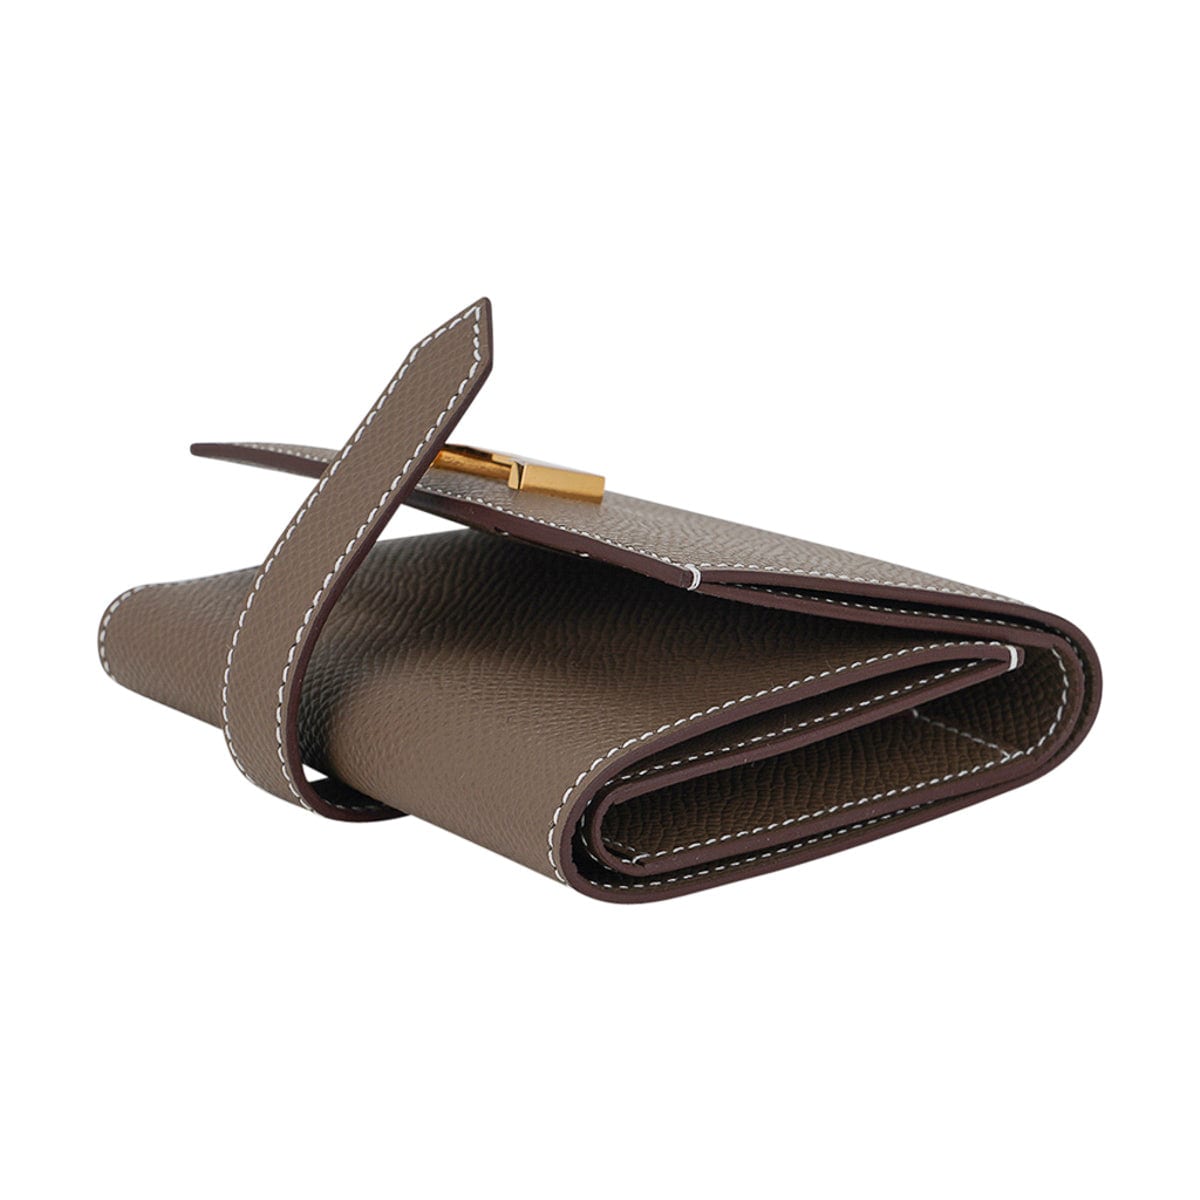 Bearn Compact wallet